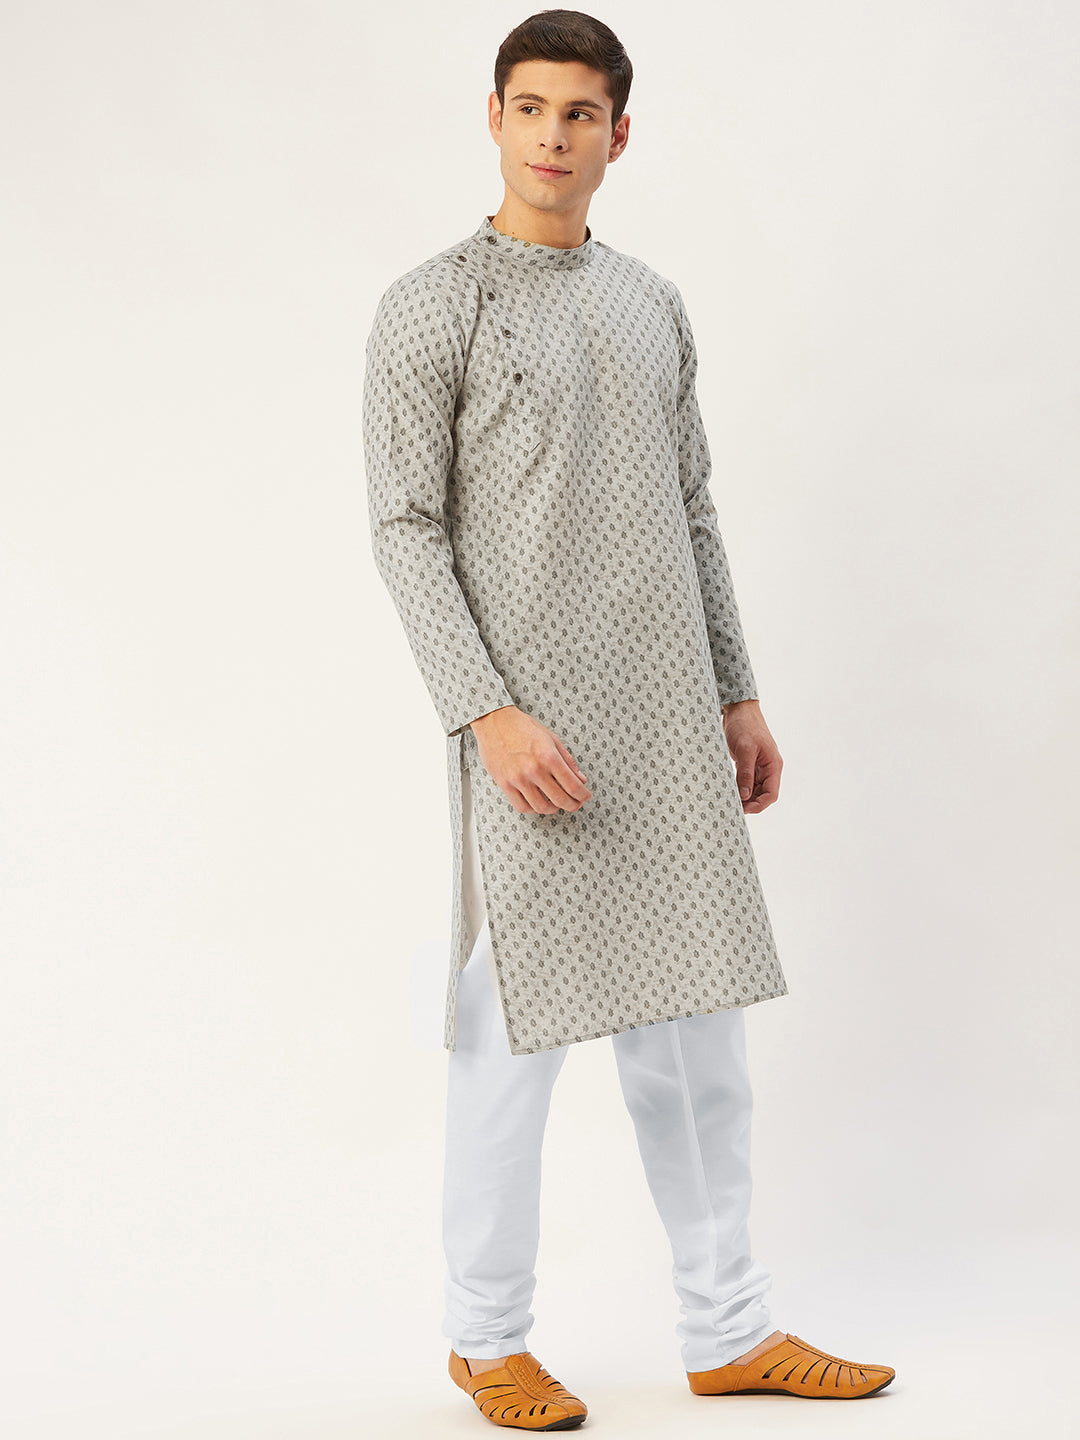 Jompers Men's Grey Cotton printed kurta Pyjama Set